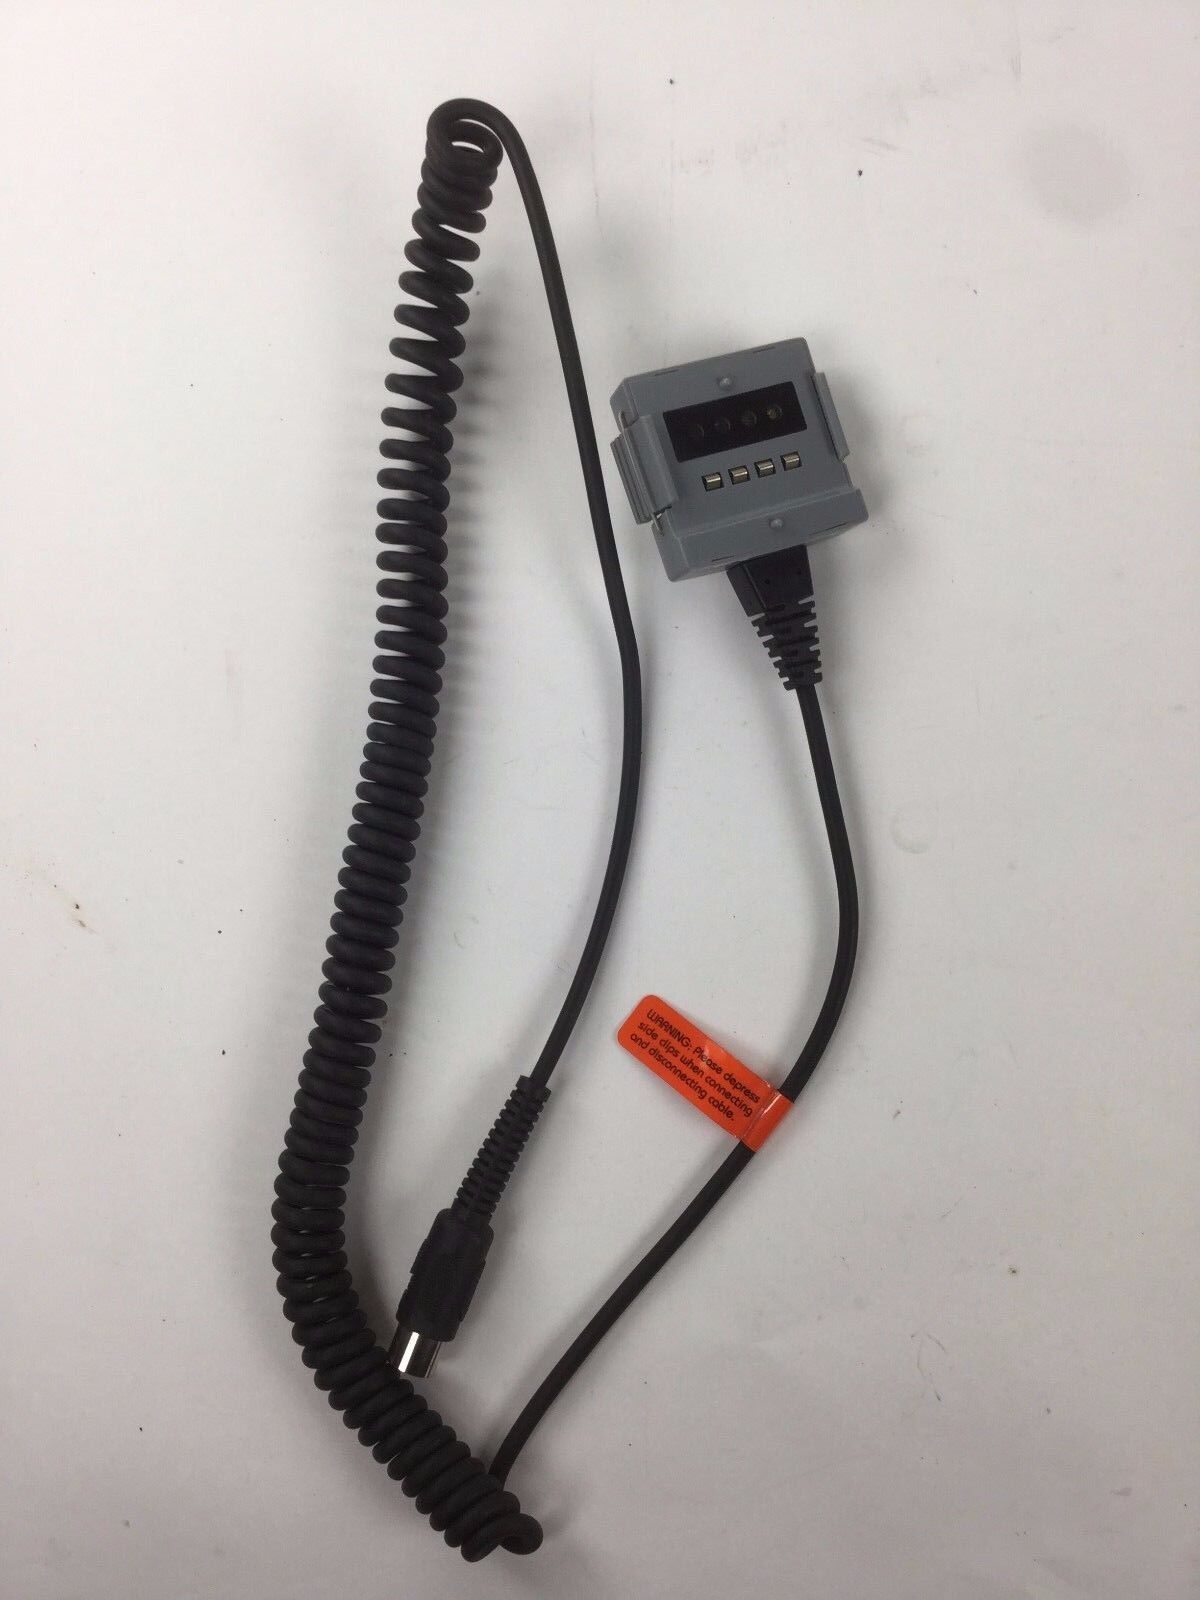 Zebra TTL PIM CC11371-15 Interface Cable for Symbol